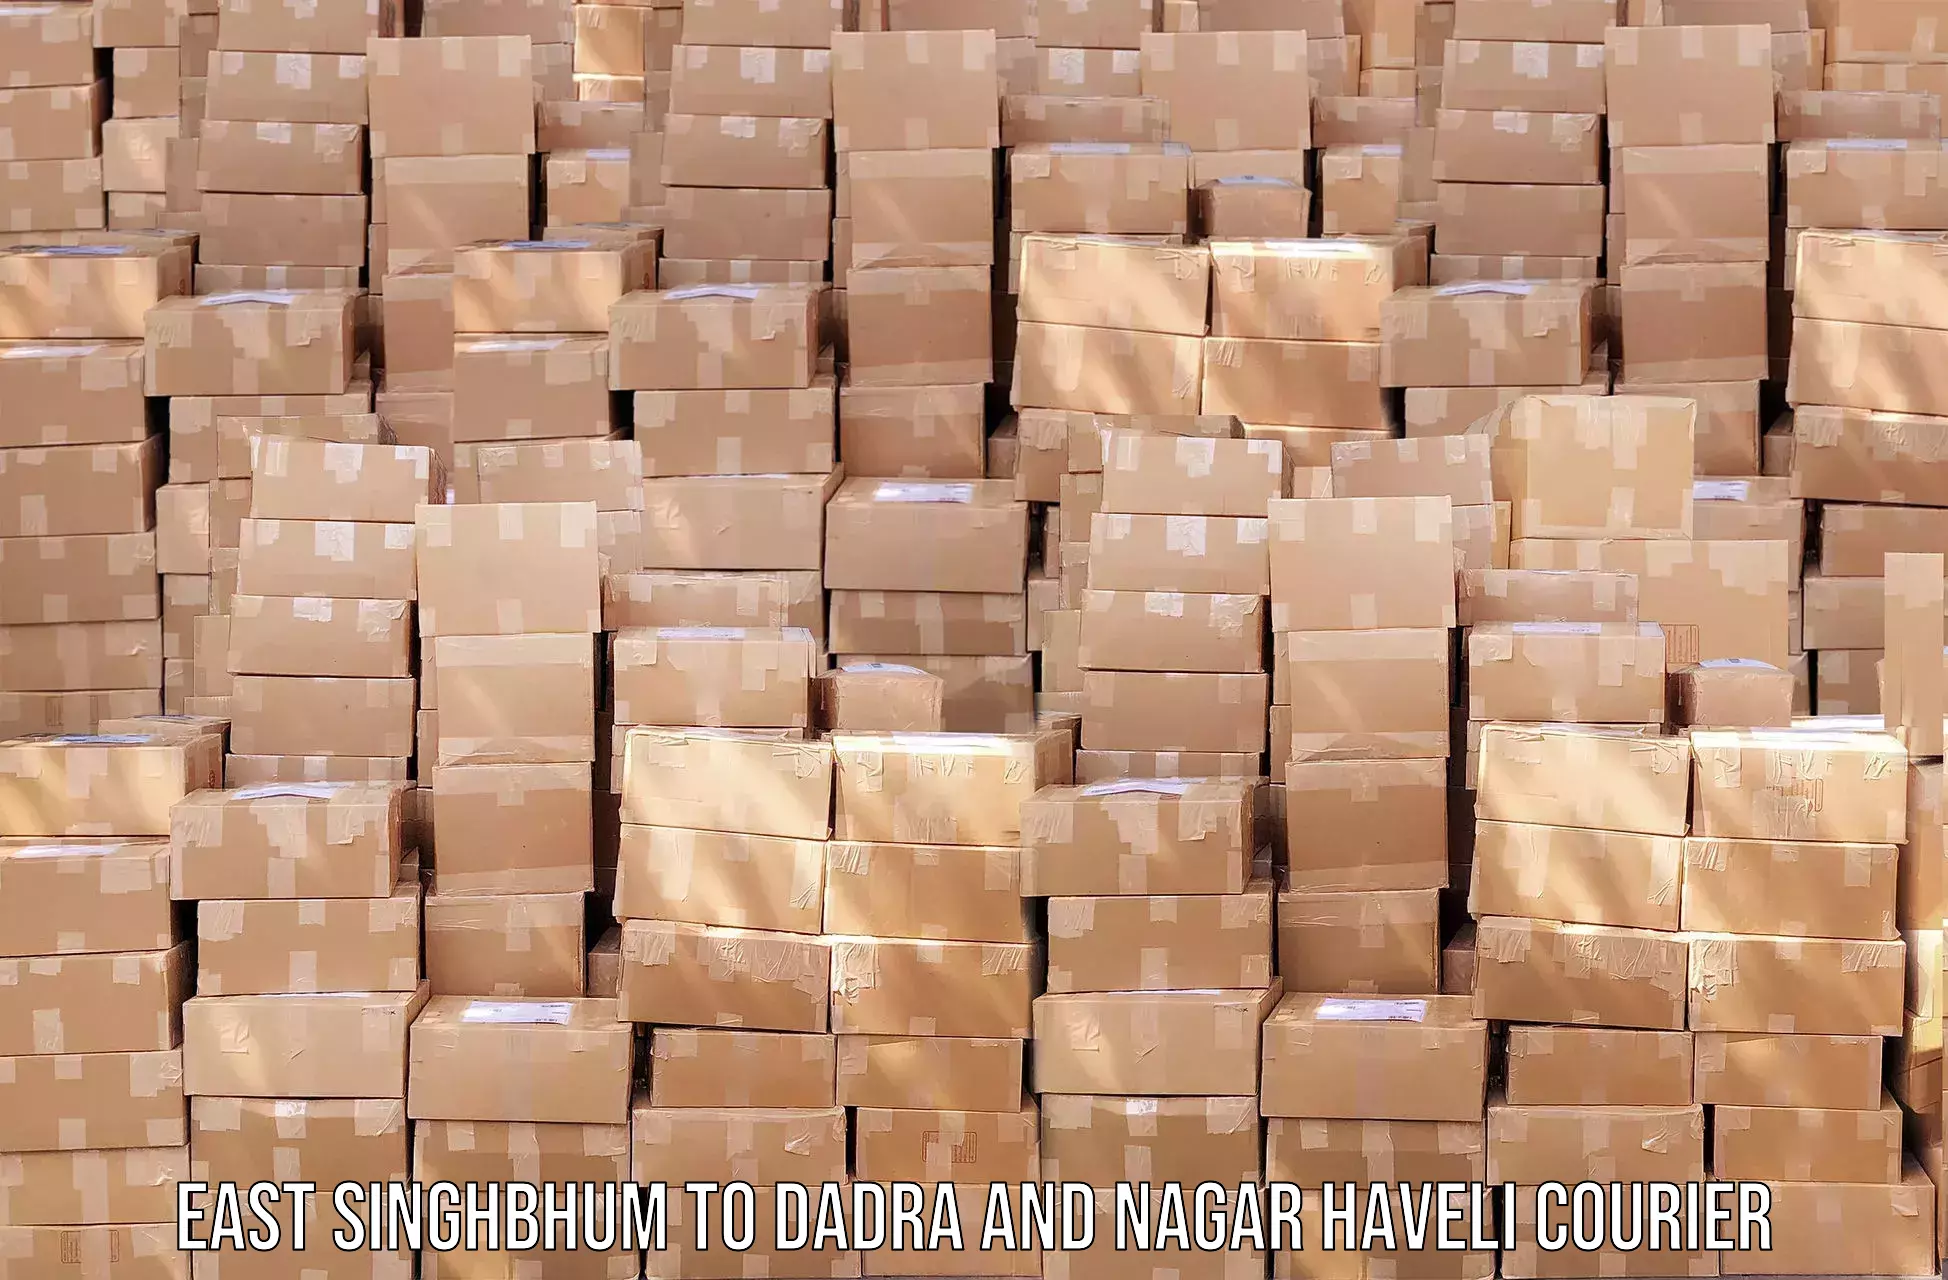 Efficient cargo handling East Singhbhum to Dadra and Nagar Haveli